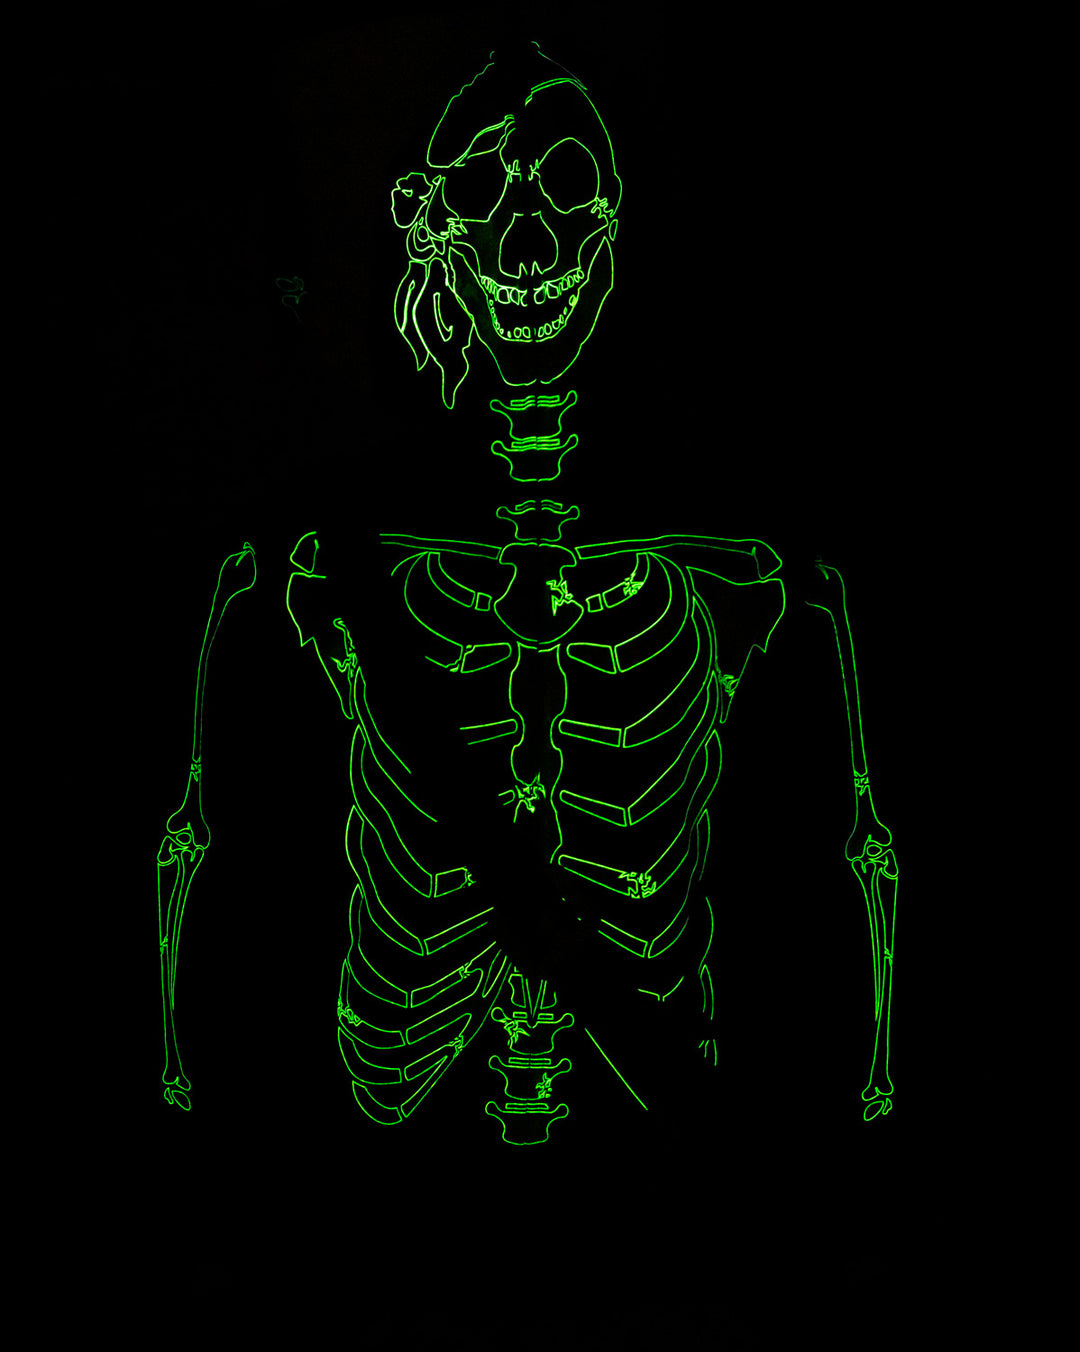 Glow in the Dark Pirate Skeleton Hoodie - Full Zip Hooded Costume – Calhoun  Store